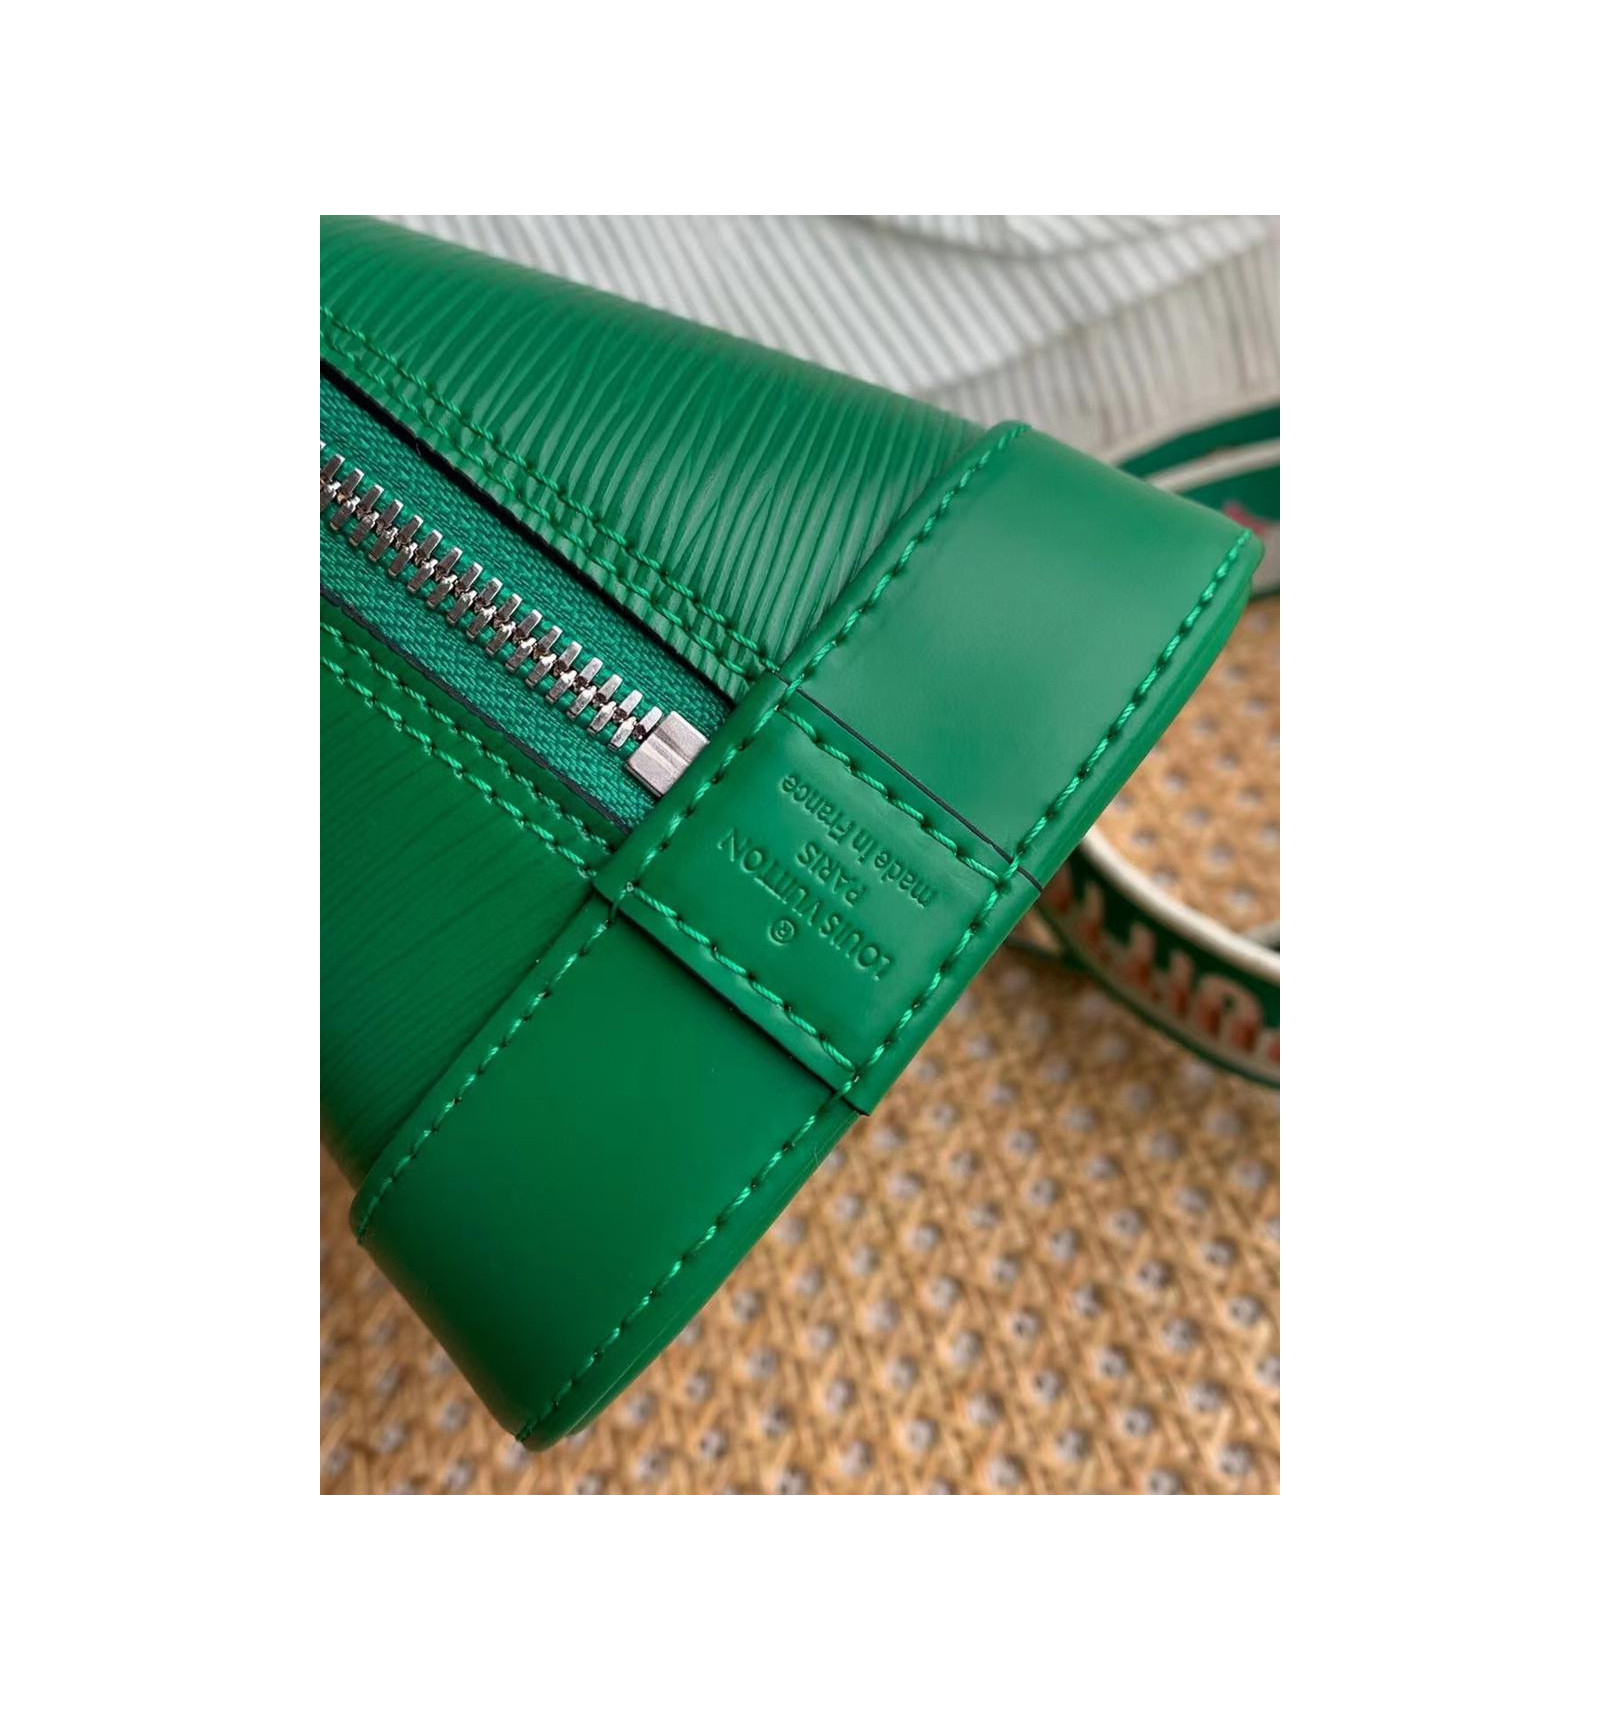 Alma BB Epi Leather - Handbags M22357